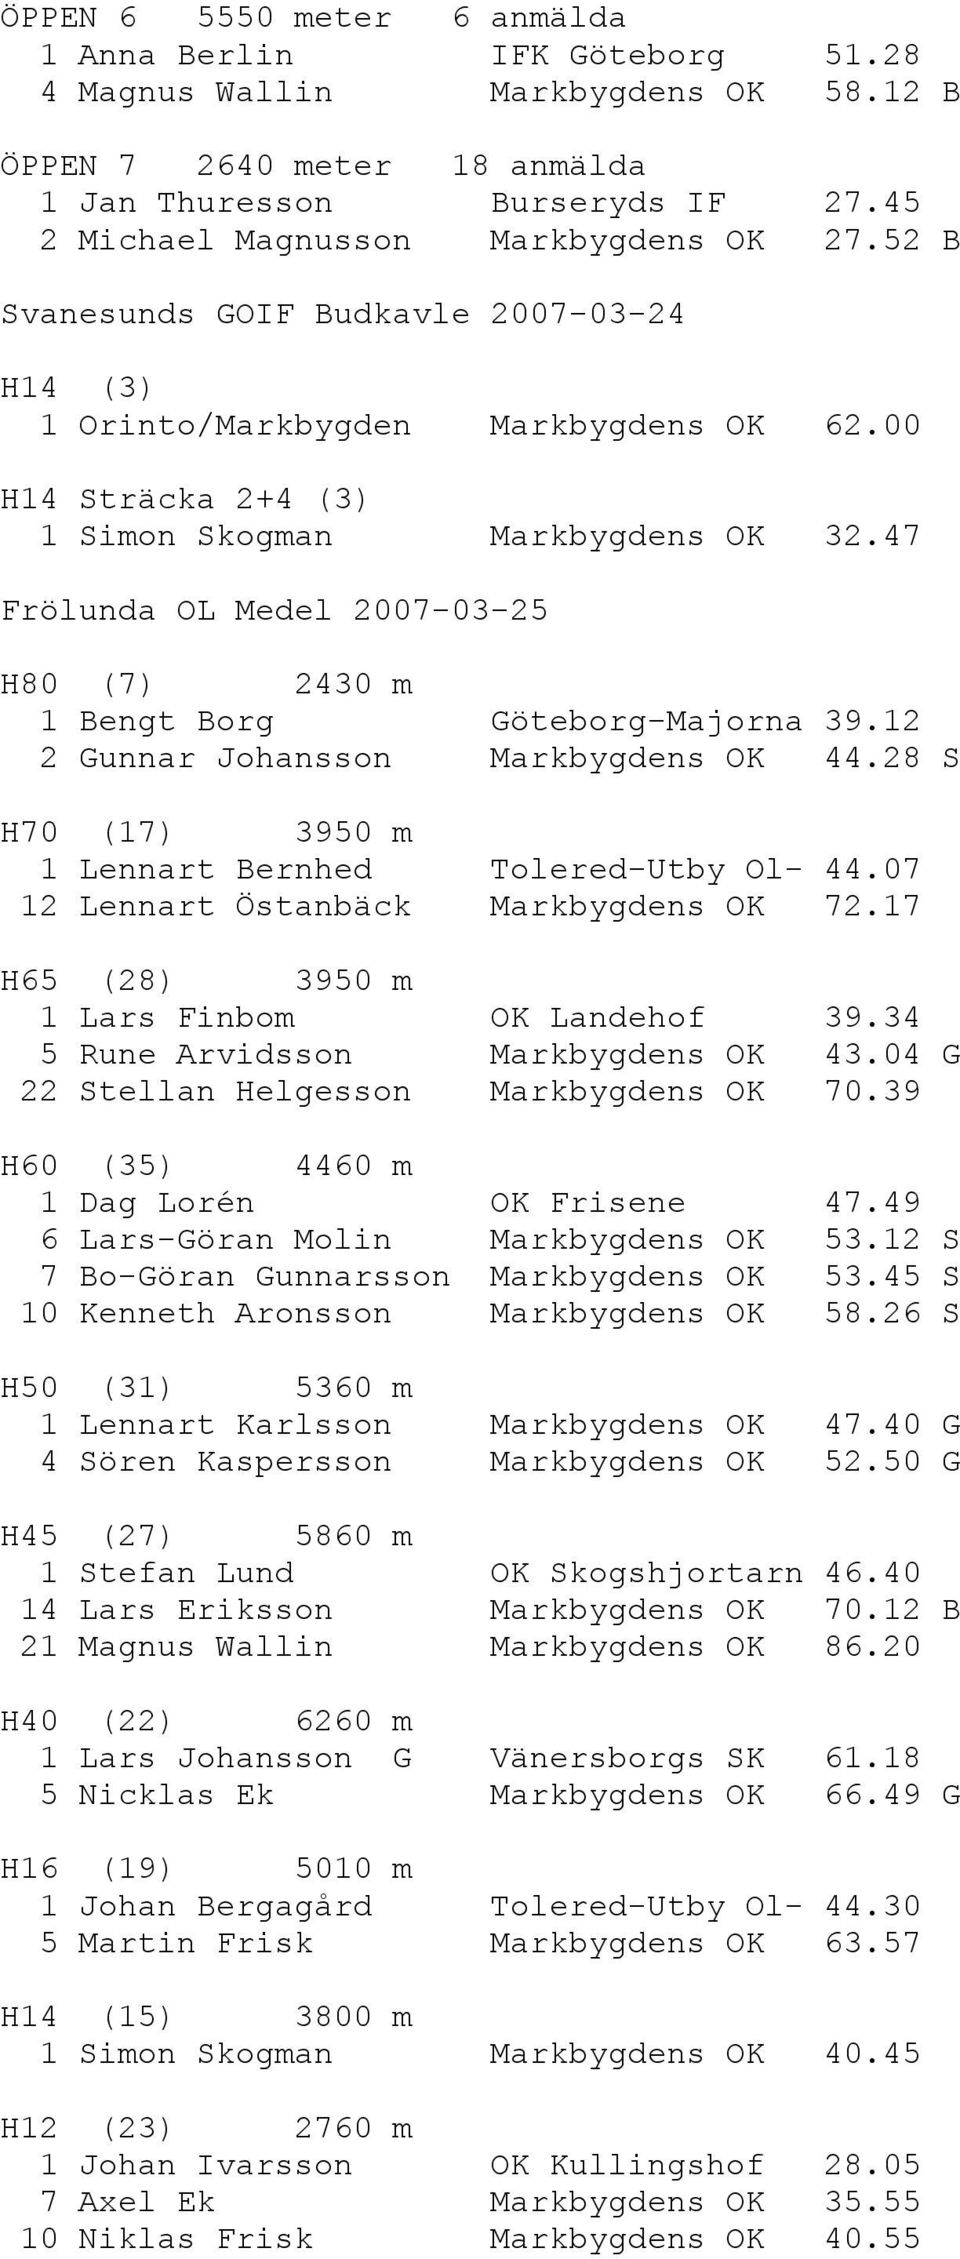 47 Frölunda OL Medel 2007-03-25 H80 (7) 2430 m 1 Bengt Borg Göteborg-Majorna 39.12 2 Gunnar Johansson Markbygdens OK 44.28 S H70 (17) 3950 m 1 Lennart Bernhed Tolered-Utby Ol- 44.